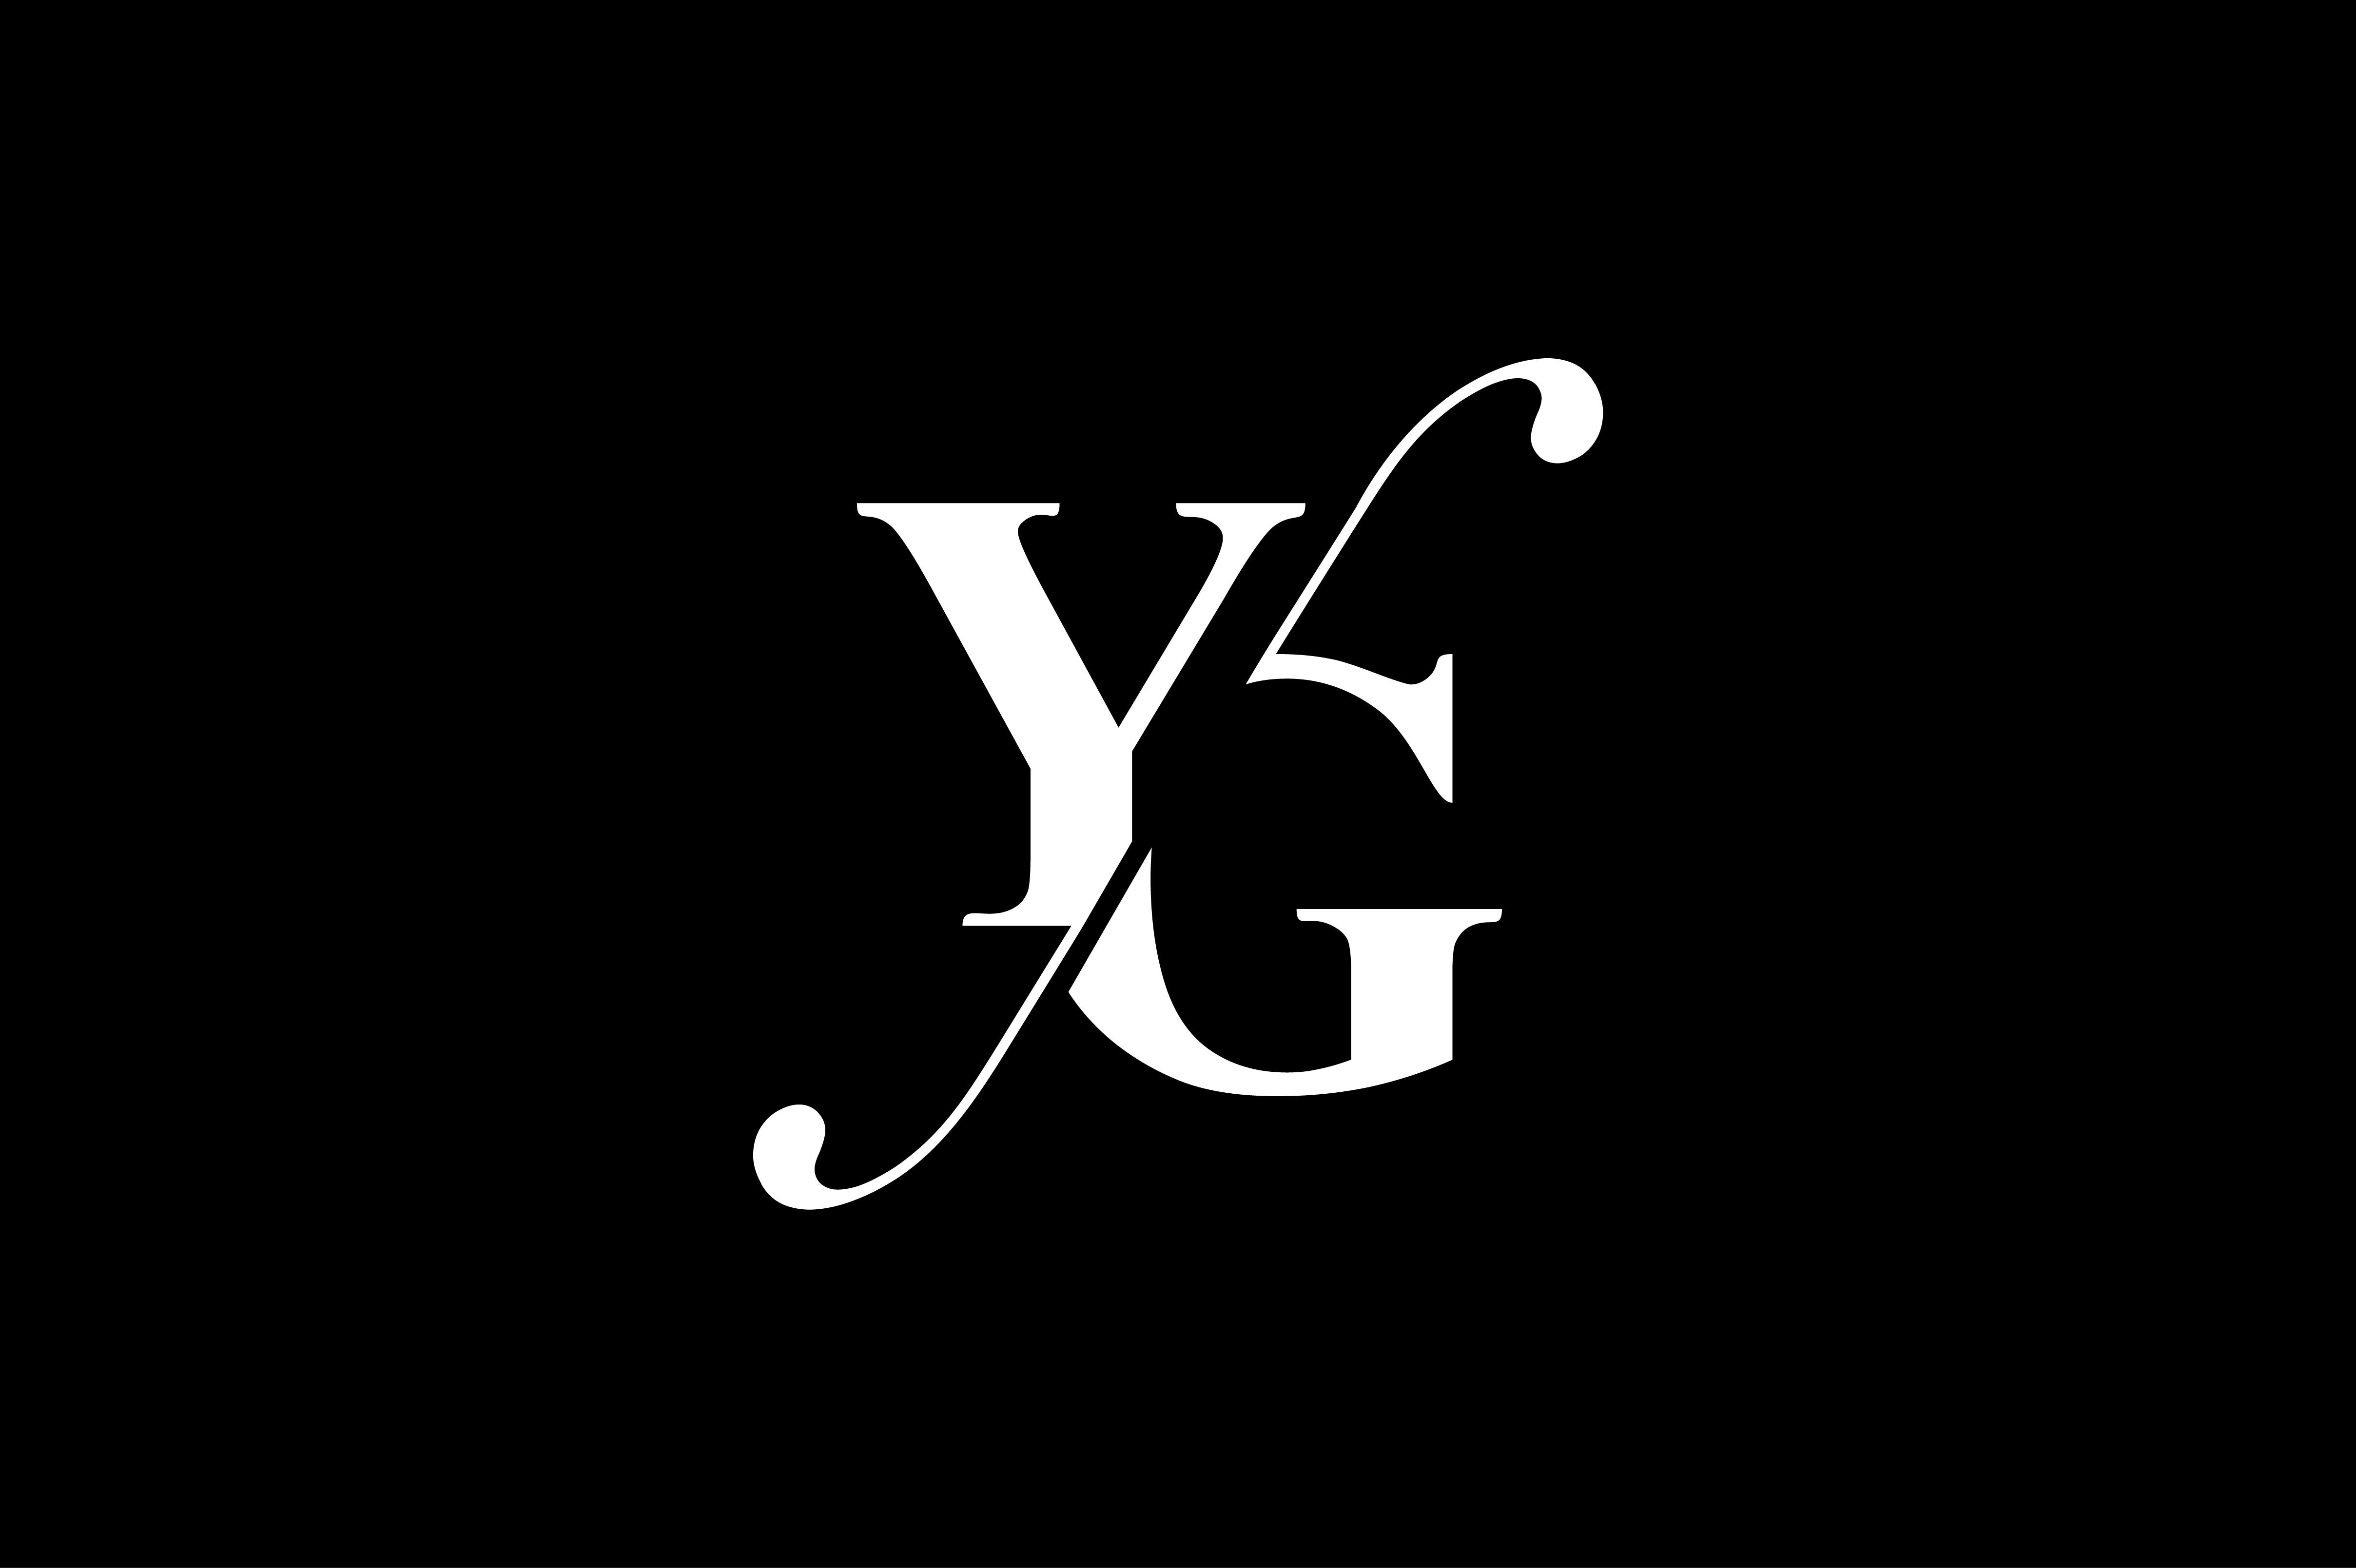 YG Monogram Logo Design By Vectorseller.